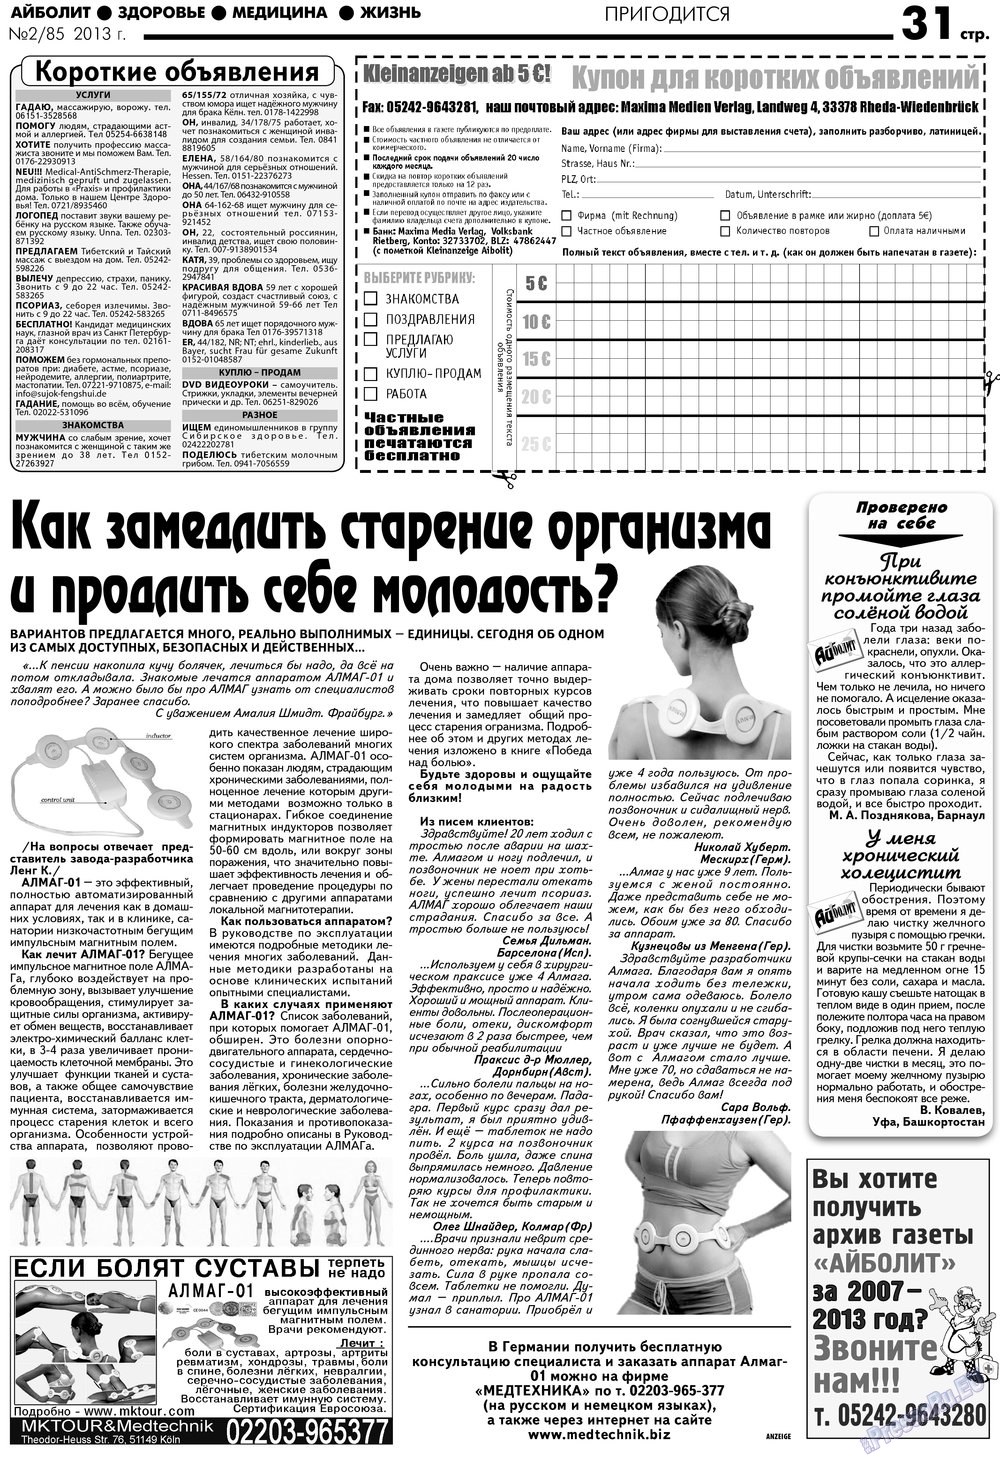 АйБолит (газета). 2013 год, номер 2, стр. 31